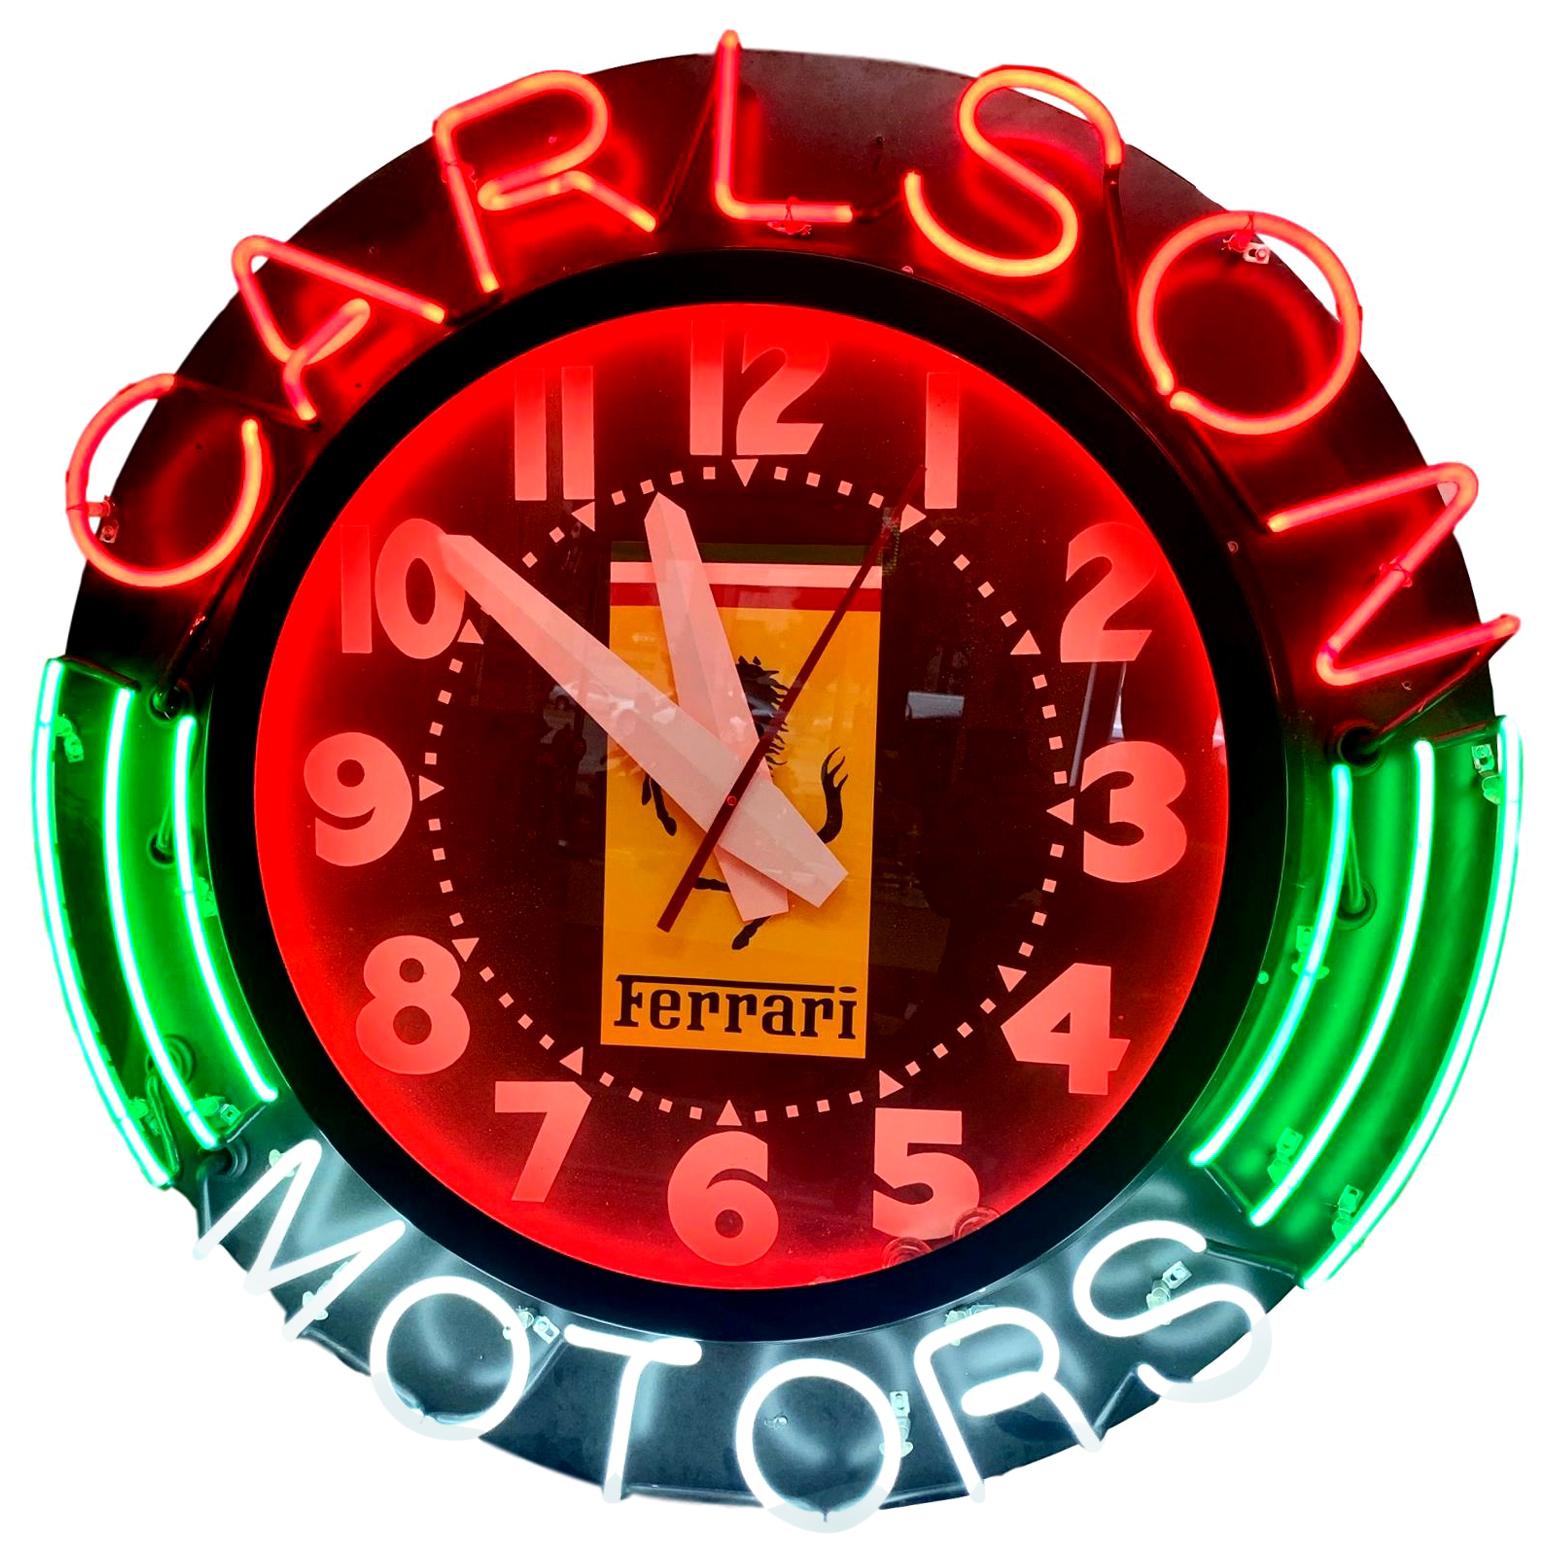 Southern California Neon Ferrari Dealership Clock